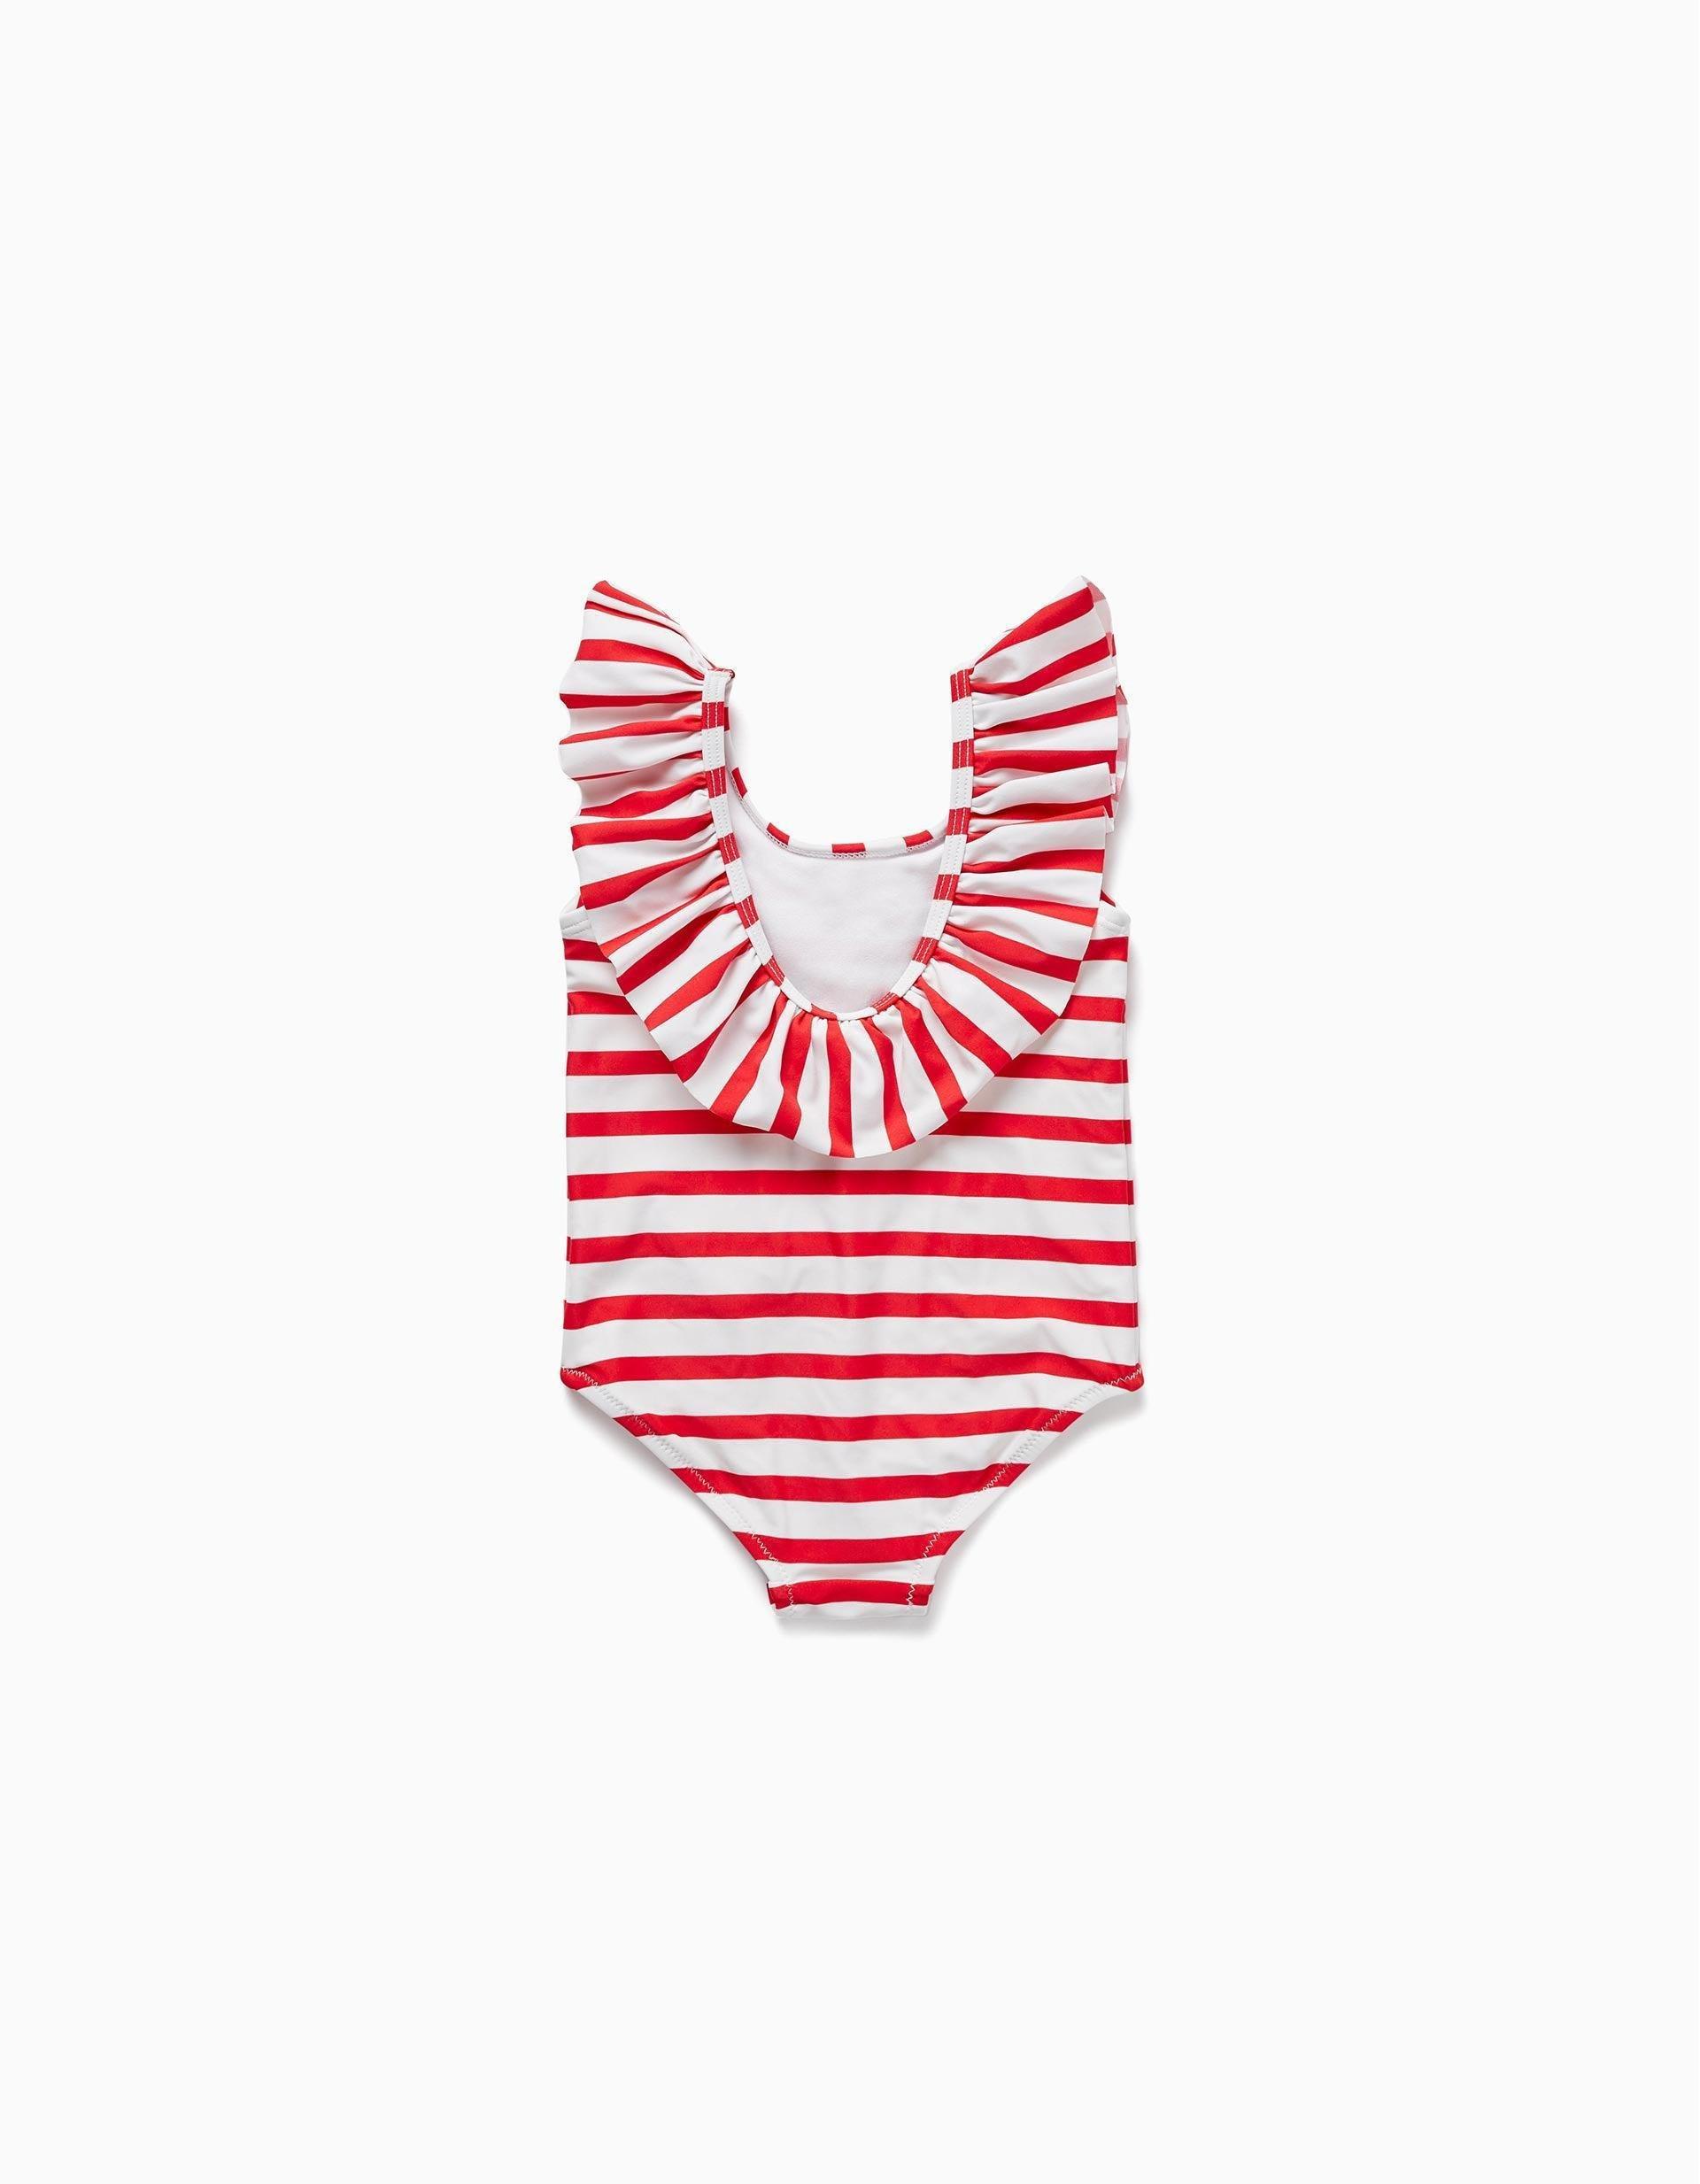 Zippy - Red Striped Swimsuit, Baby Girls